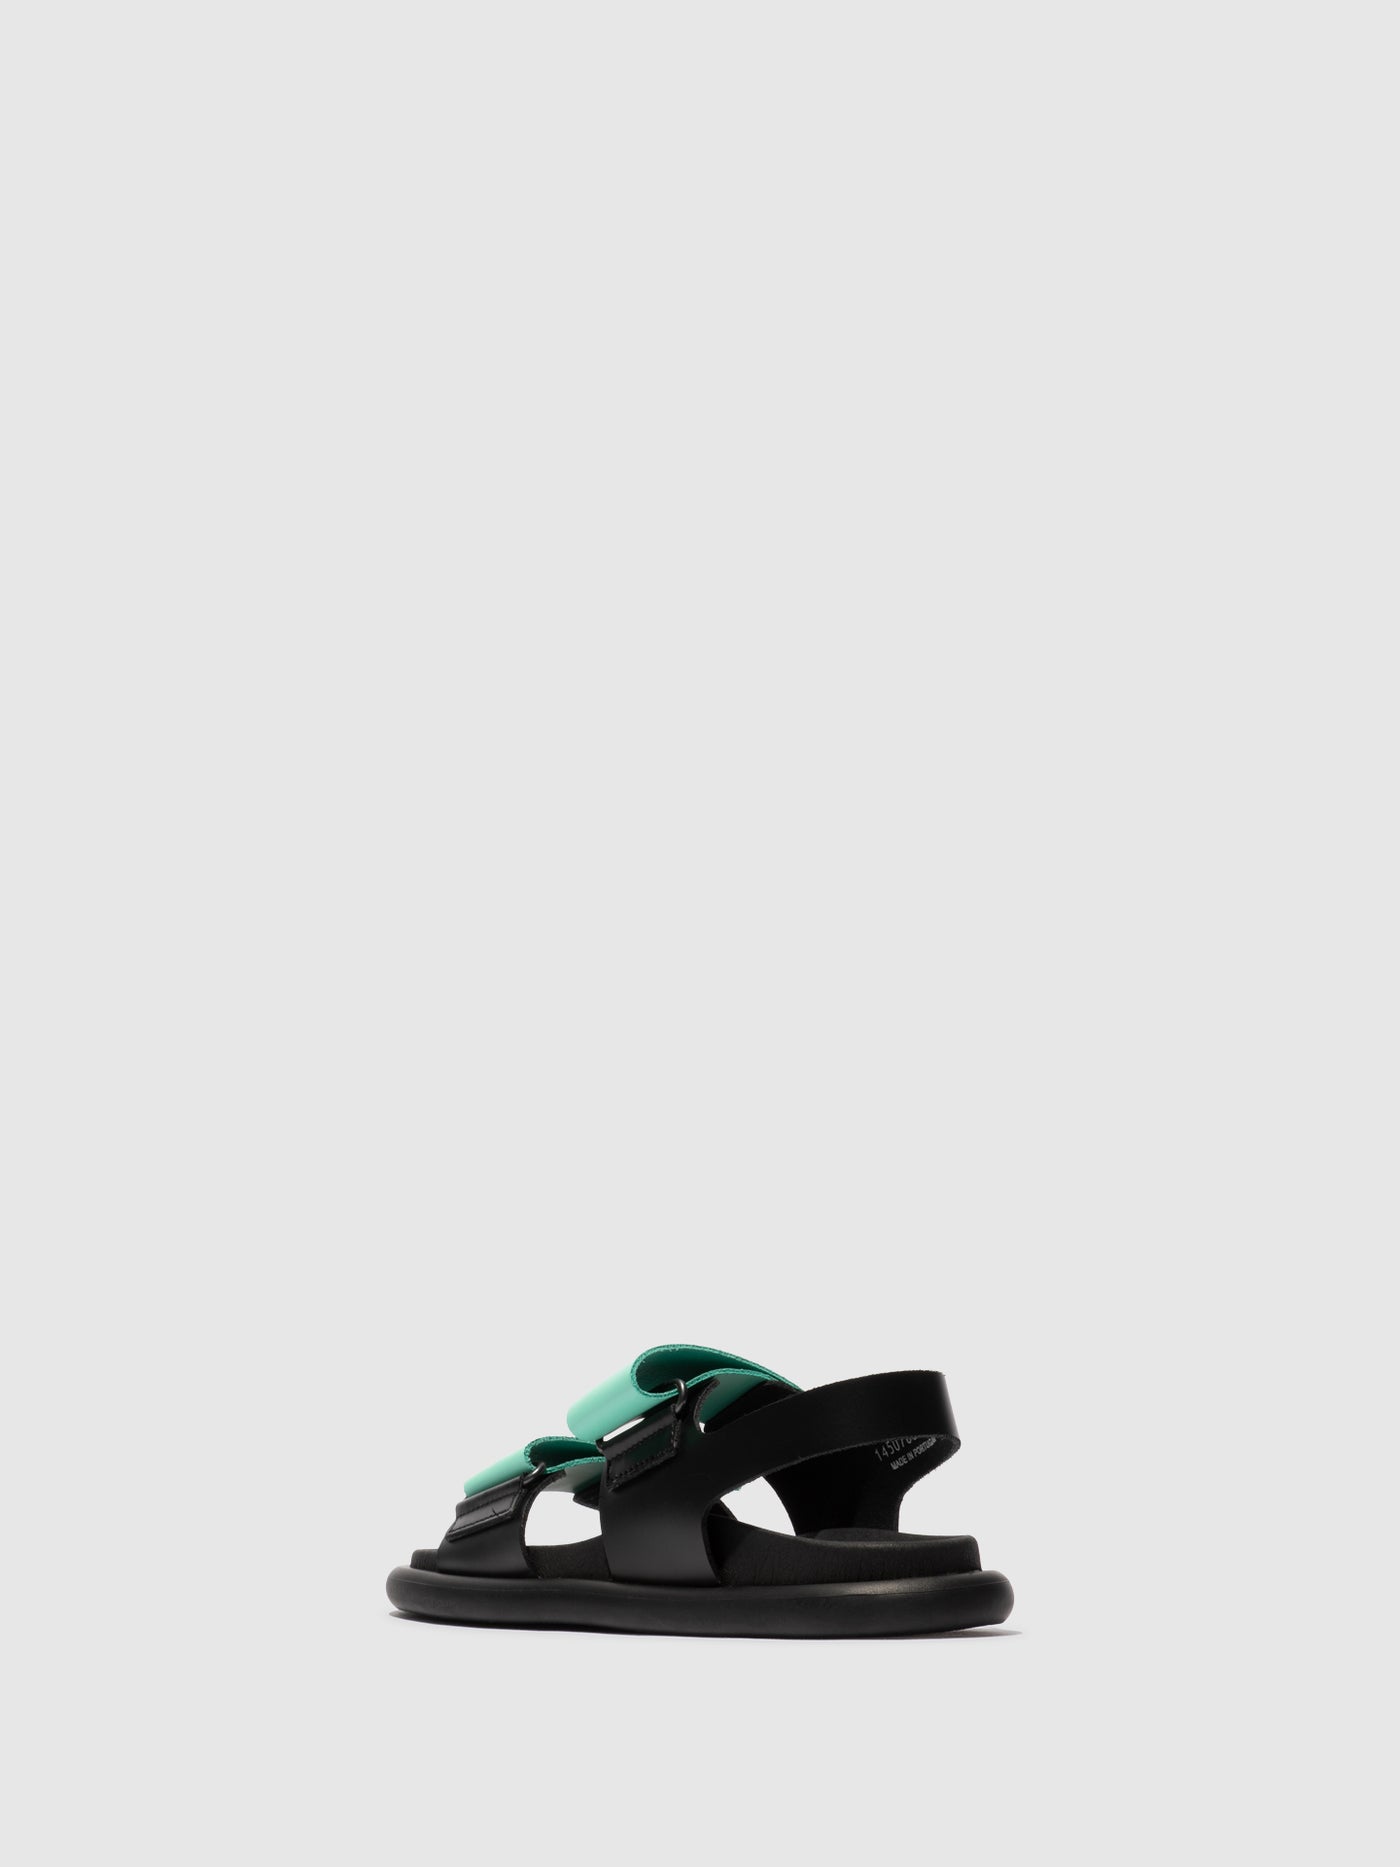 Sling-Back Sandals PAFI070FLY BLACK/SPEARMINT